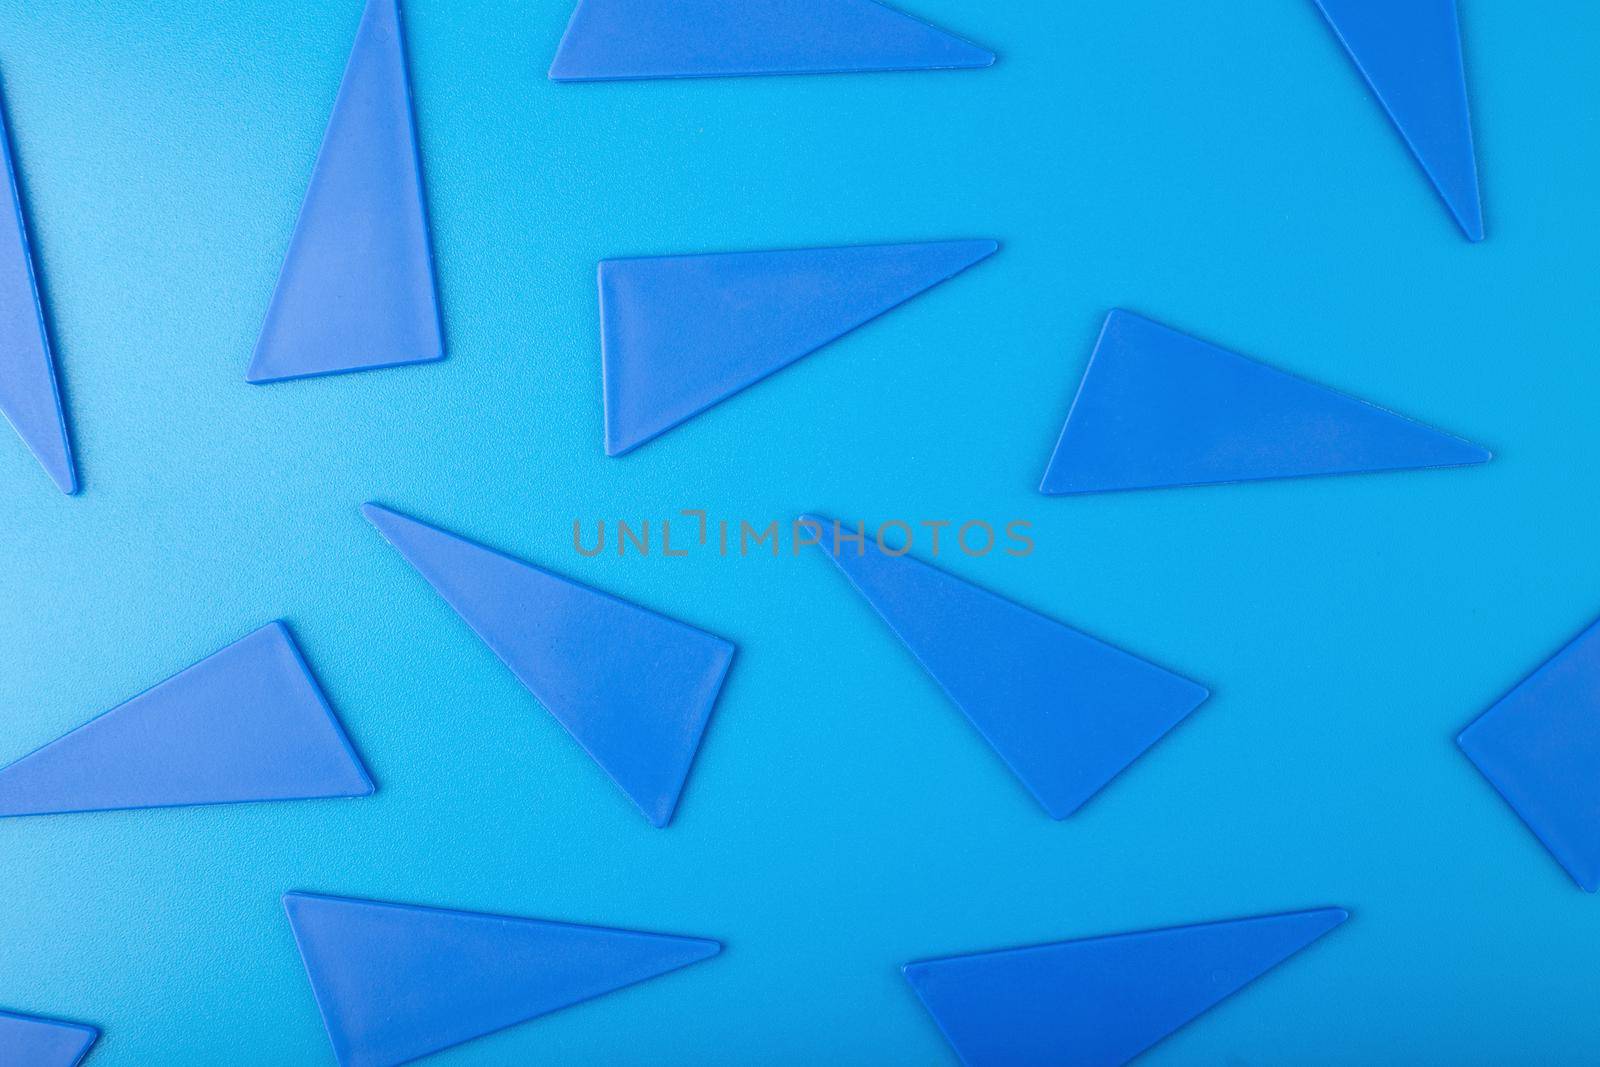 Modern abstract background with blue triangles by Senorina_Irina